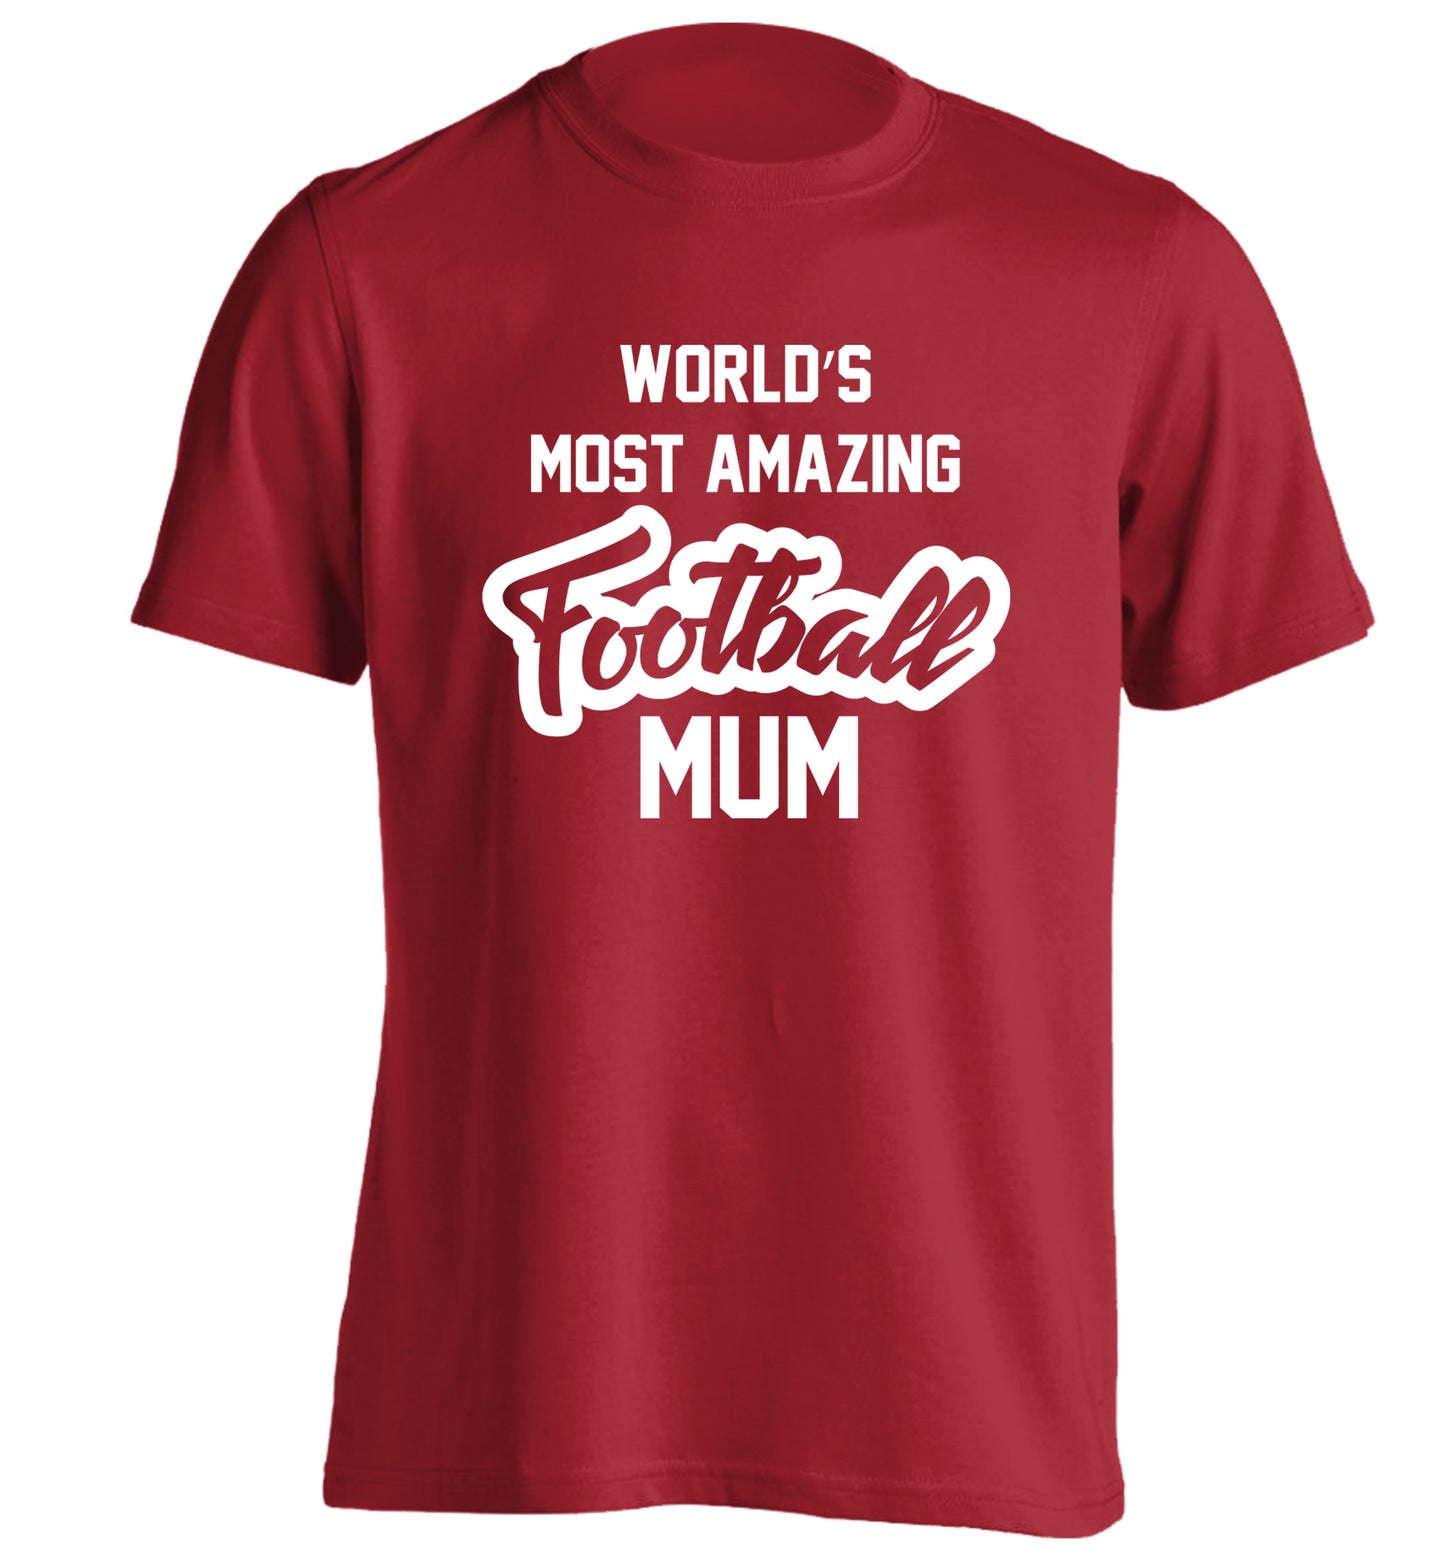 Worlds most amazing football mum adults unisexred Tshirt 2XL